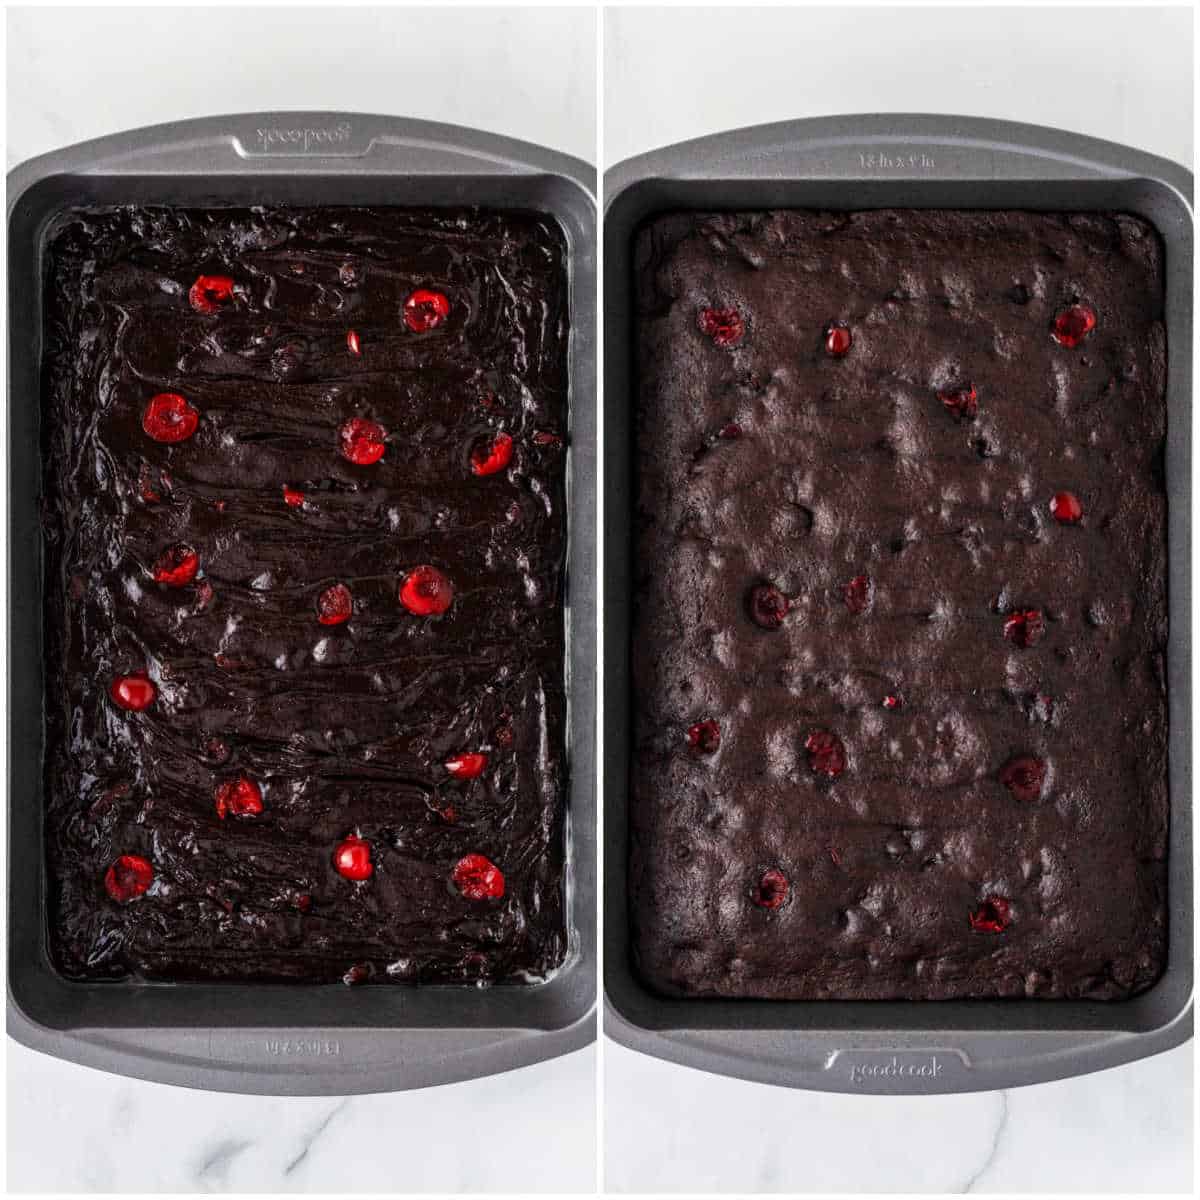 Steps to make chocolate cherry brownies.